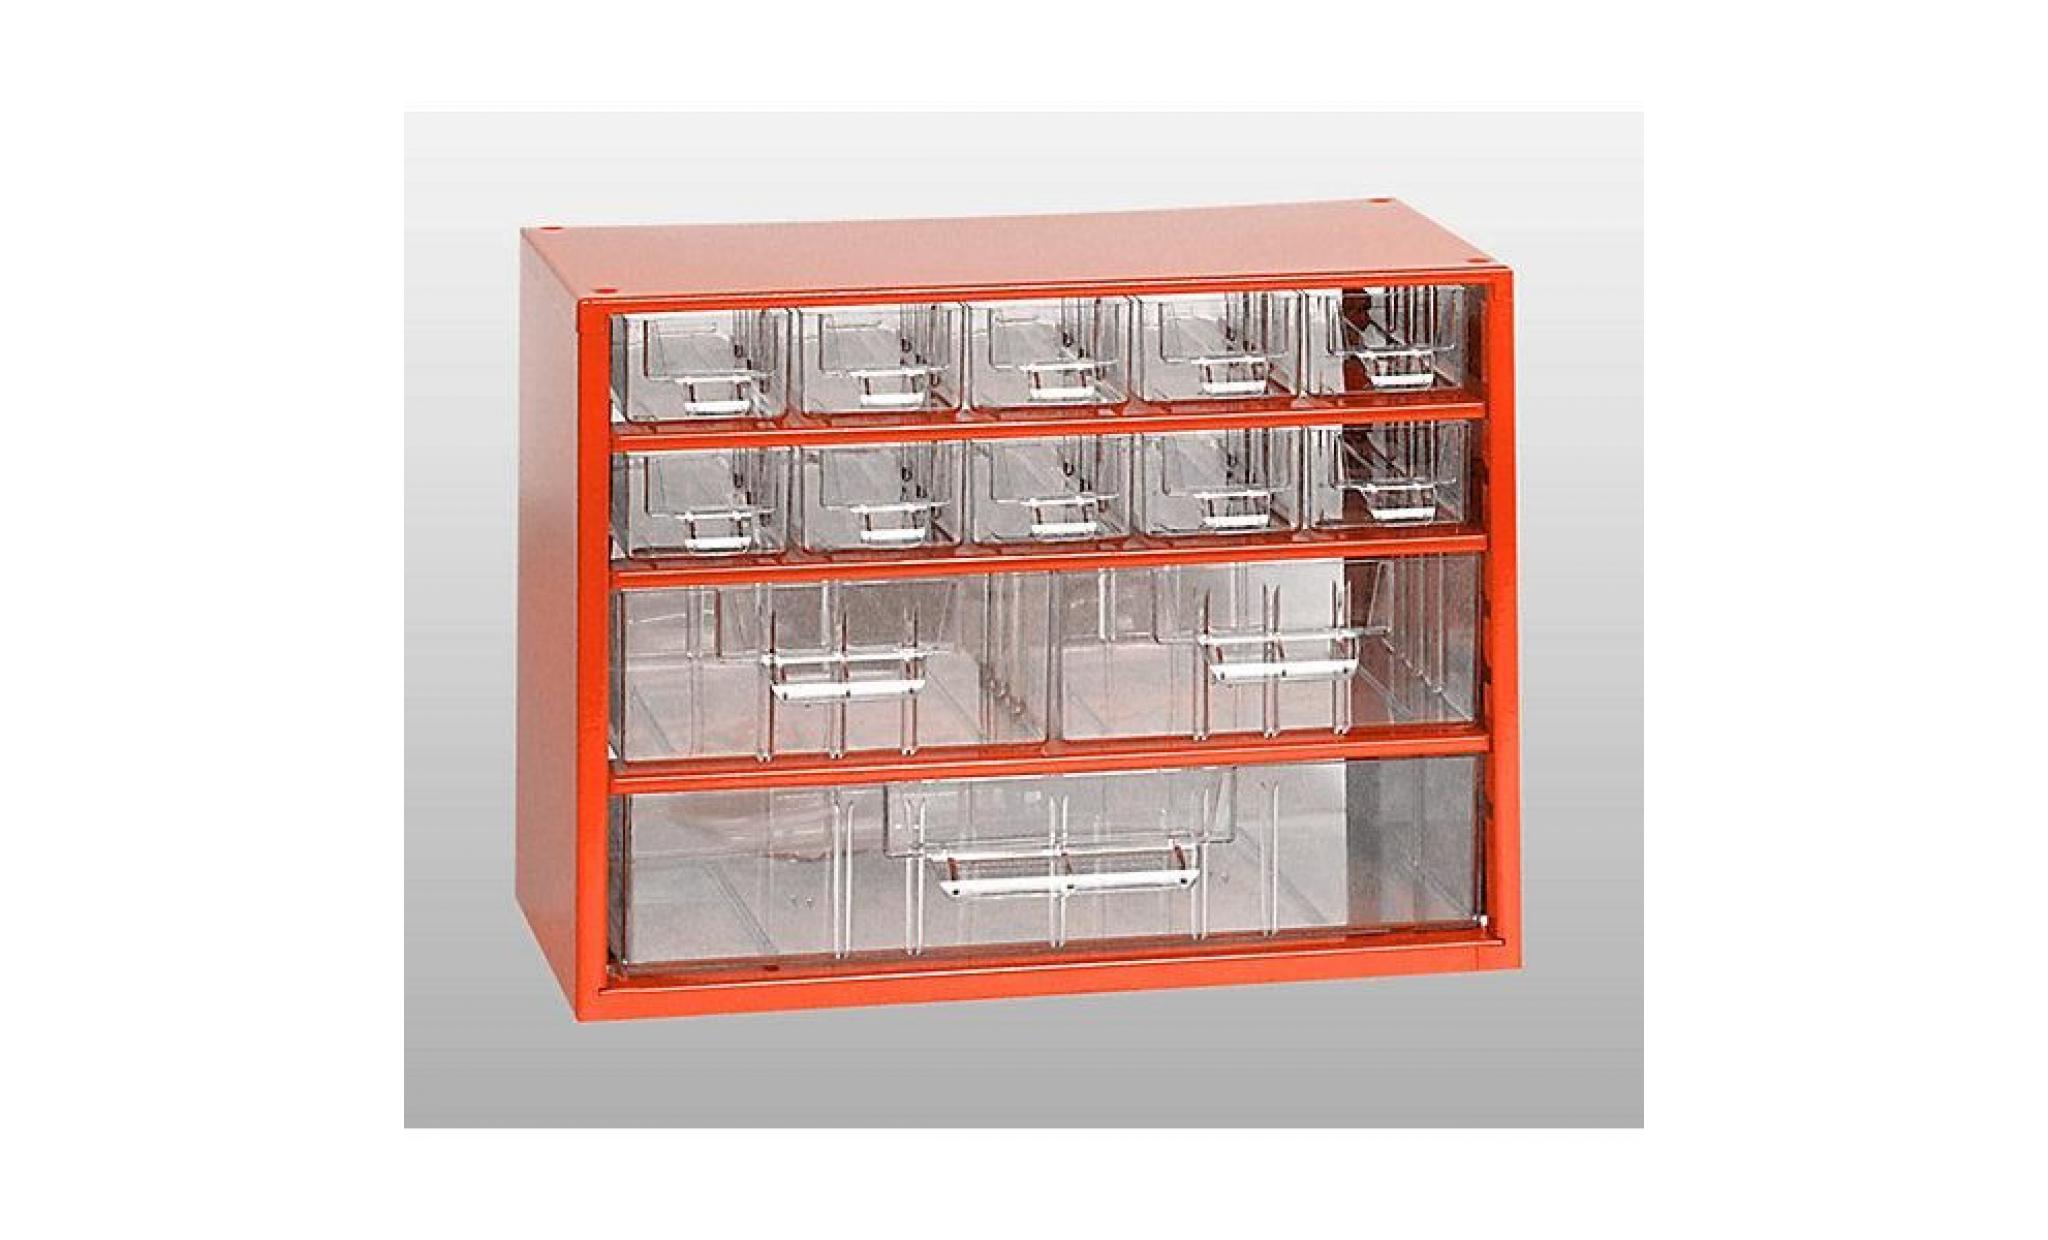 bloc tiroirs   h x l 238 x 306 mm, 13 tiroirs orange   bloc bloc transparent bloc tiroirs blocs blocs transparents blocs tiroirs